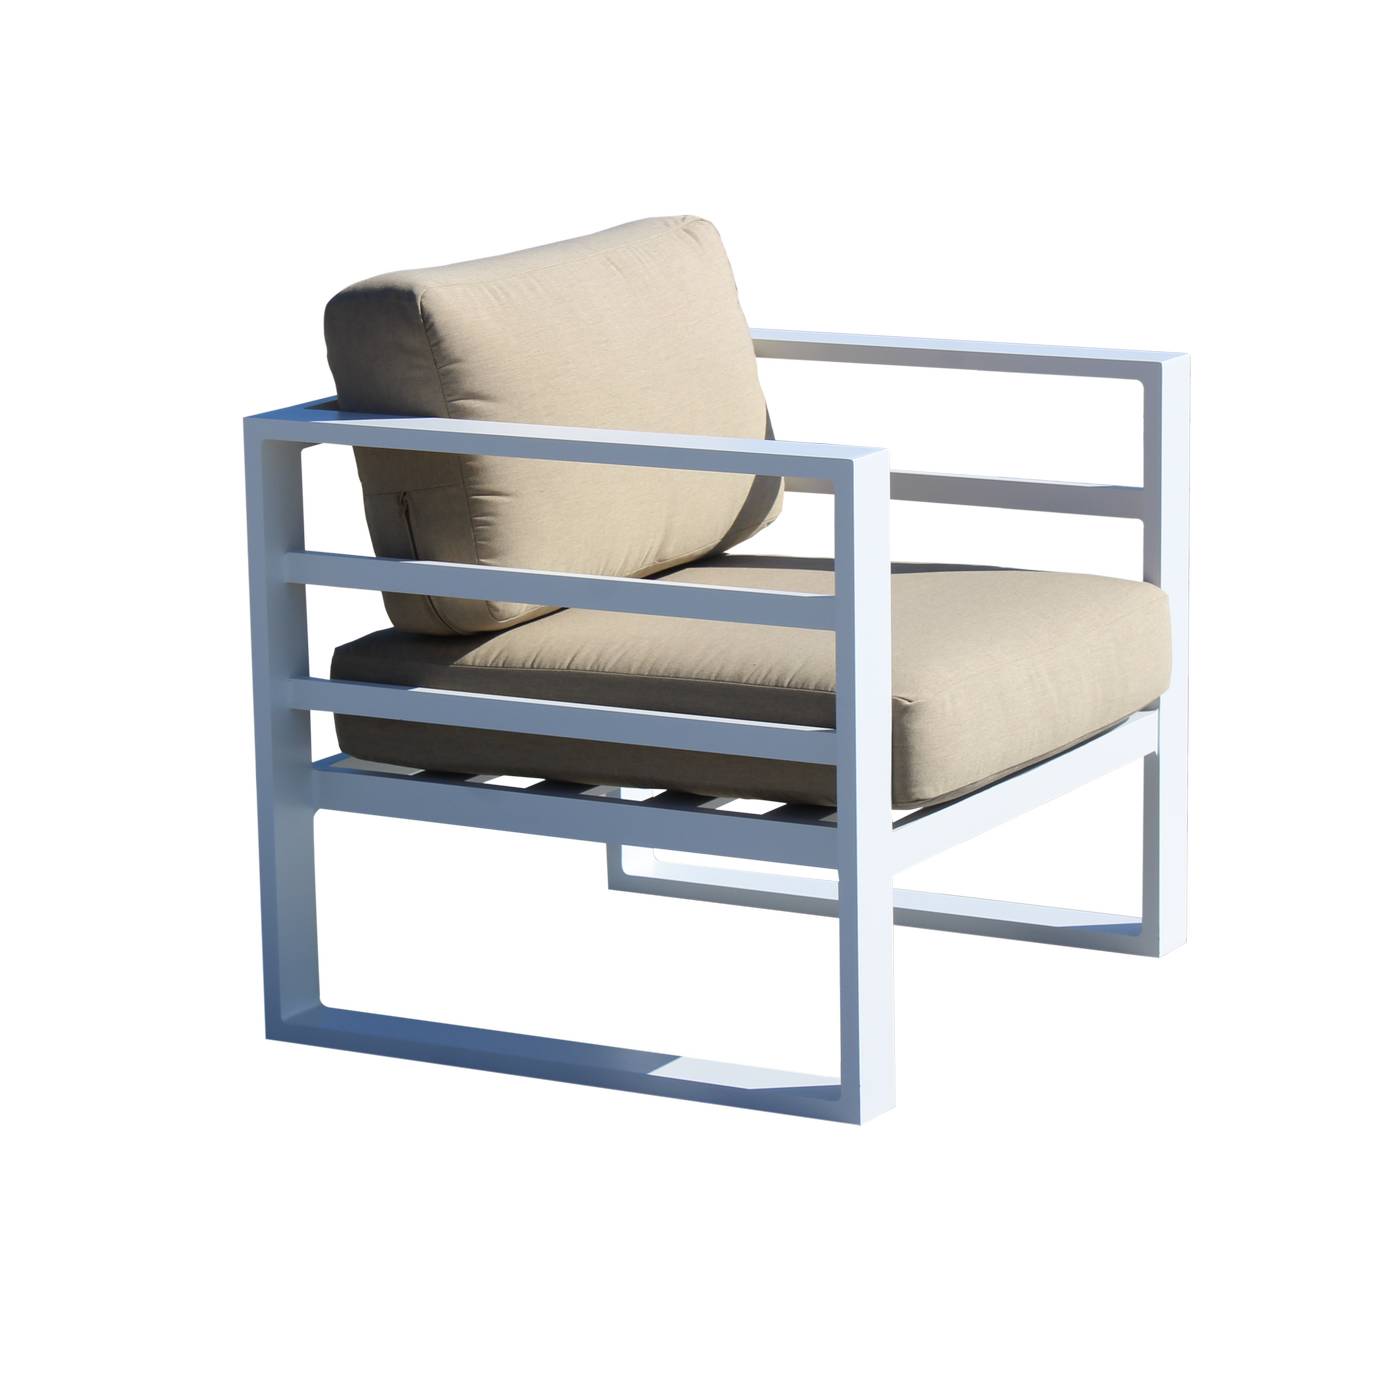 Set Aluminio Dalas-8 - Conjunto de aluminio para jardín o terraza: sofá 3 plazas + 2 sillones + mesa de centro. Disponible en color blanco o antracita.